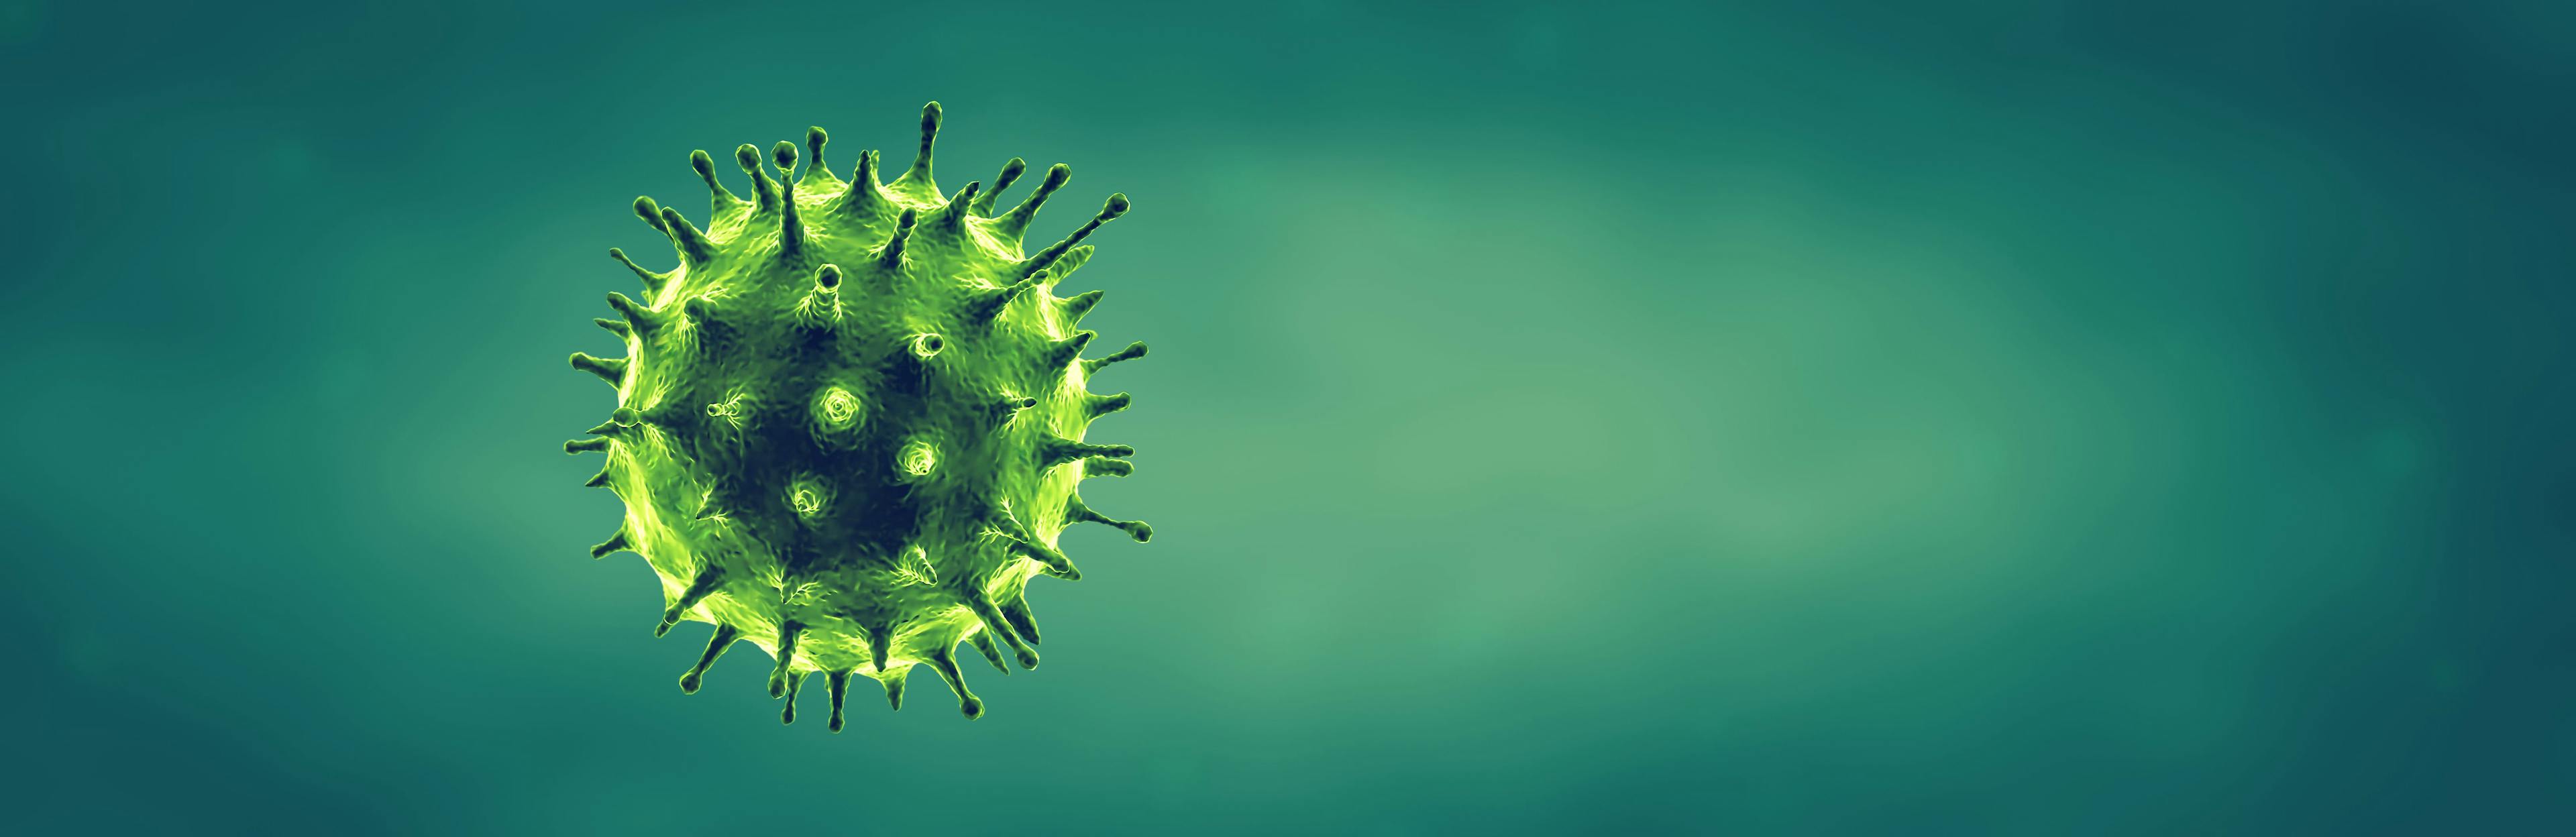 Coronavirus or Flu virus - Microbiology And Virology Concept | Image Credit: © Feydzhet Shabanov - stock.adobe.com